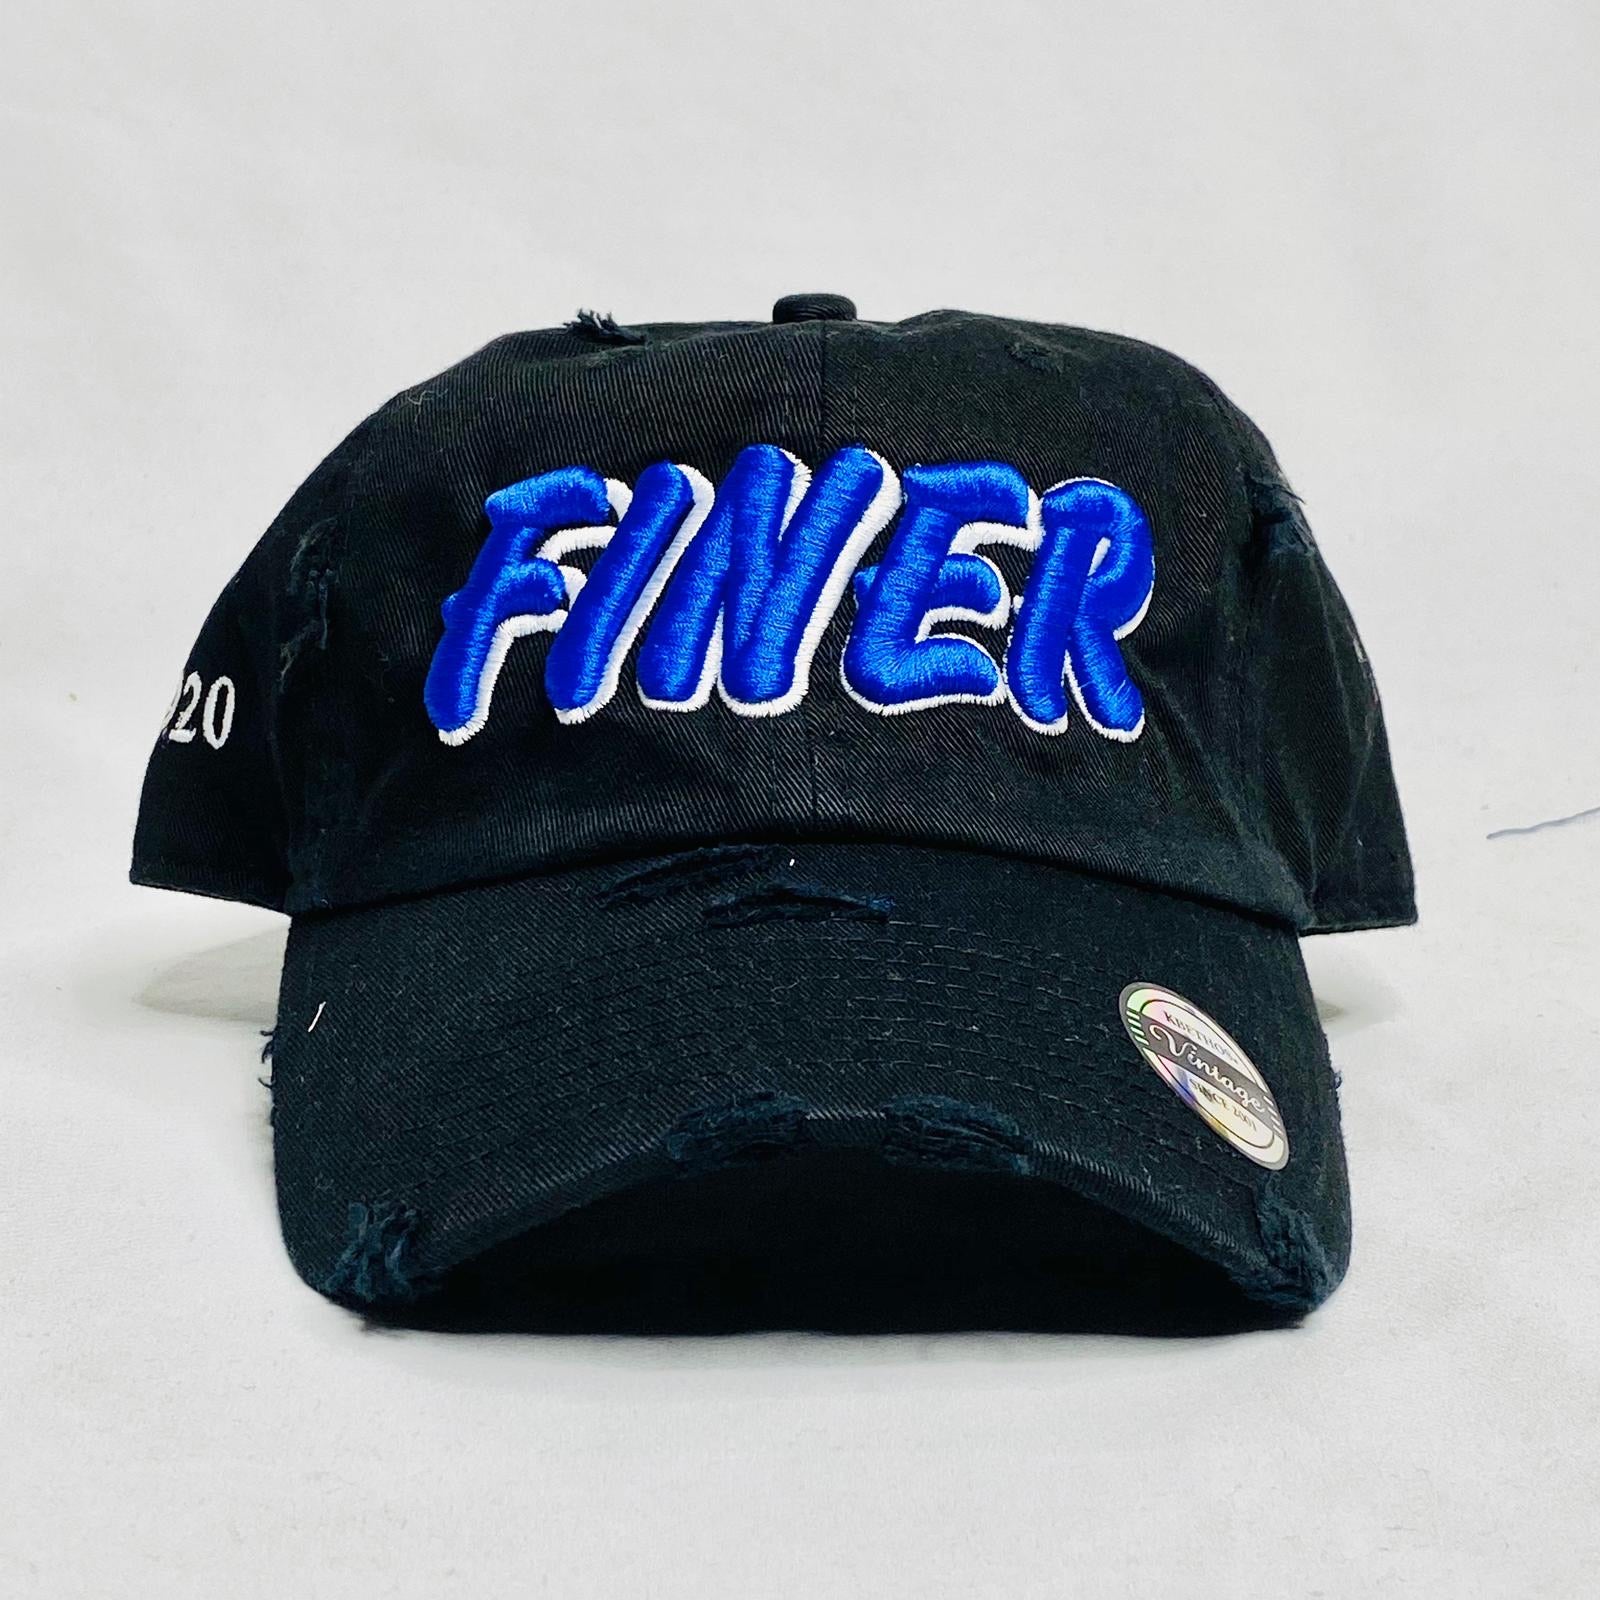 Zeta Phi Beta Finer Black Hat – The King McNeal Collection